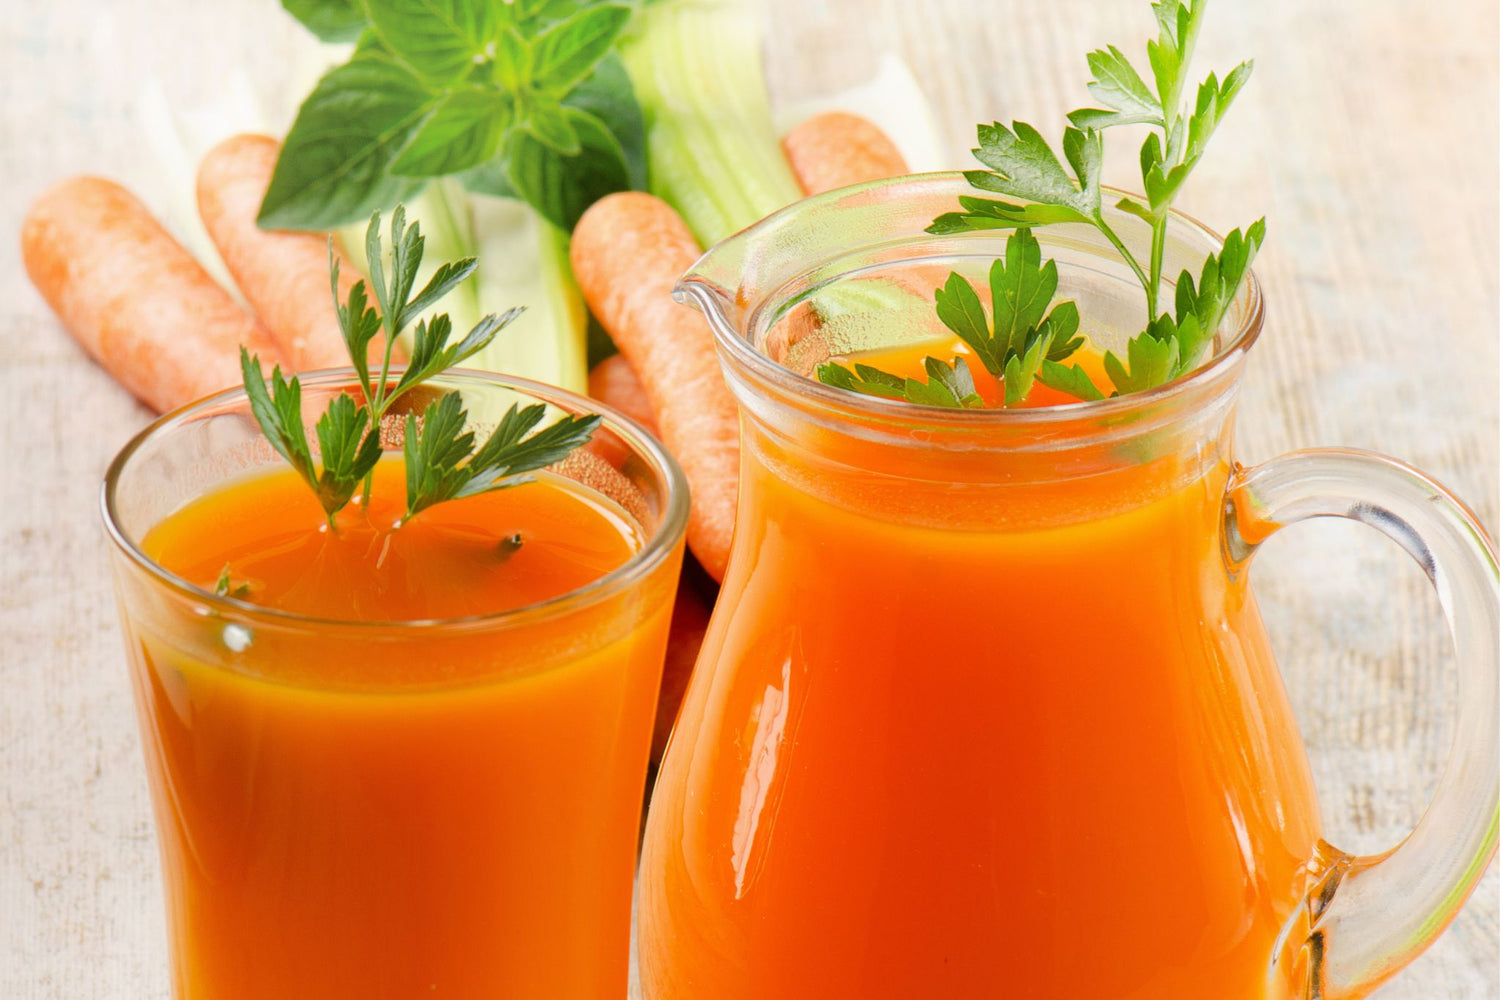 Carrot / Celery / Parsley / Tomato Juice